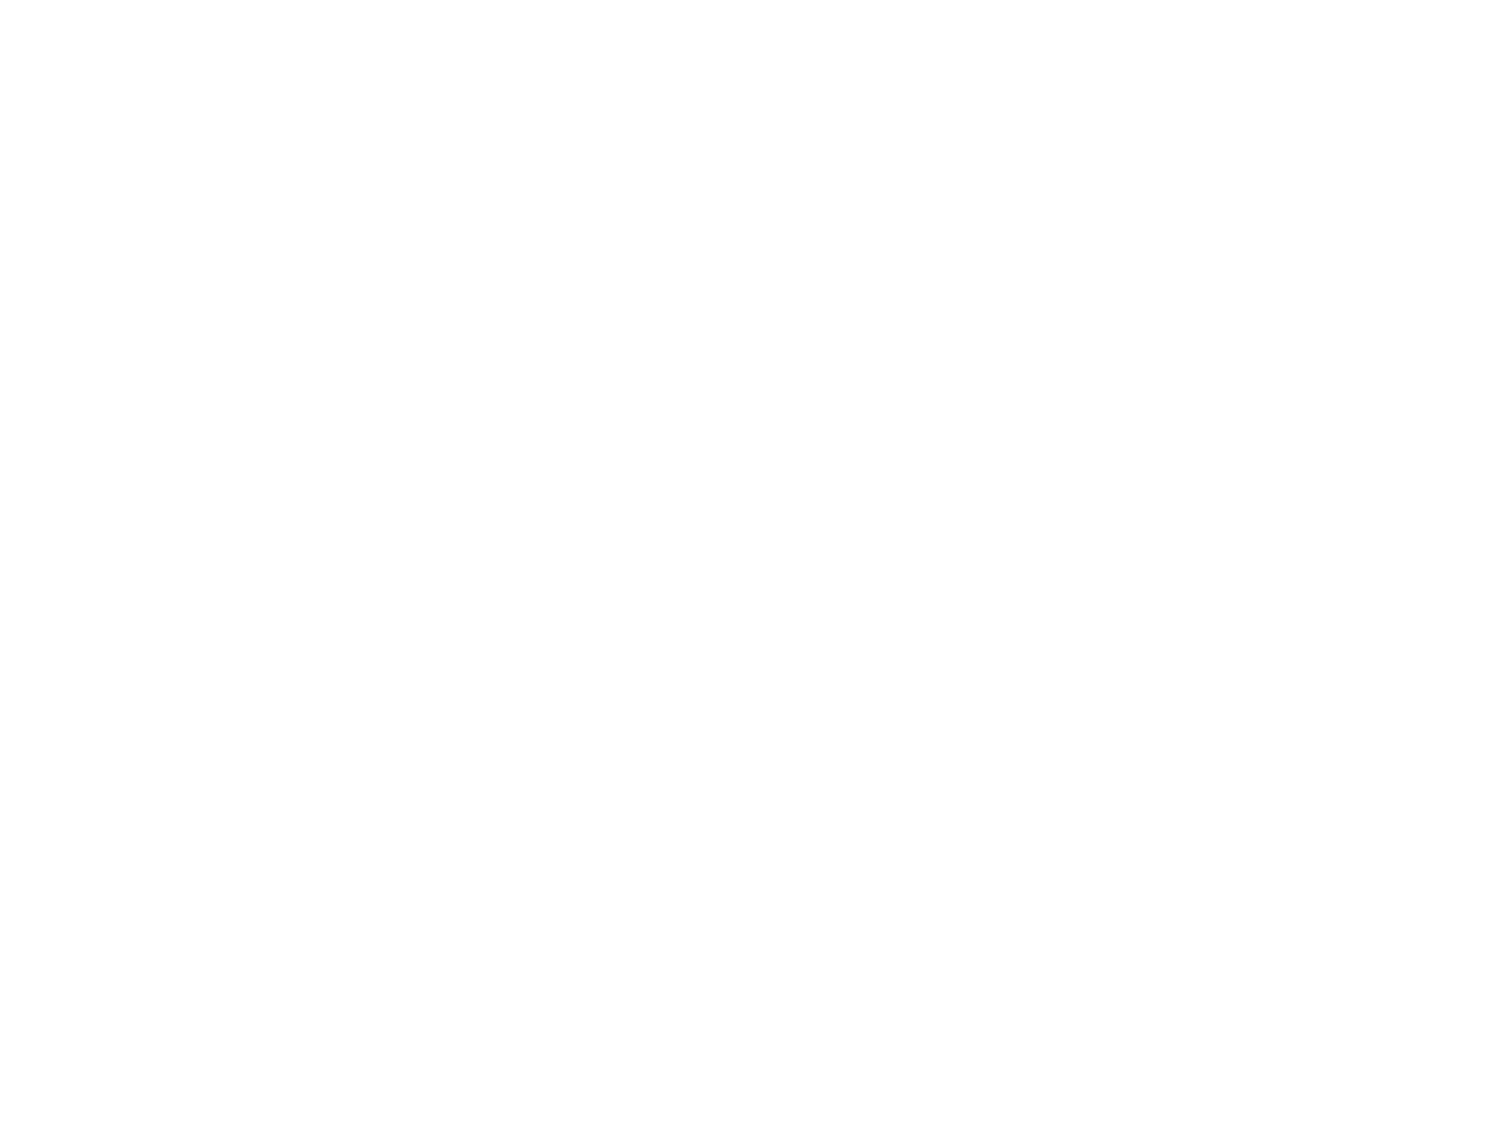 HaunMade Creative